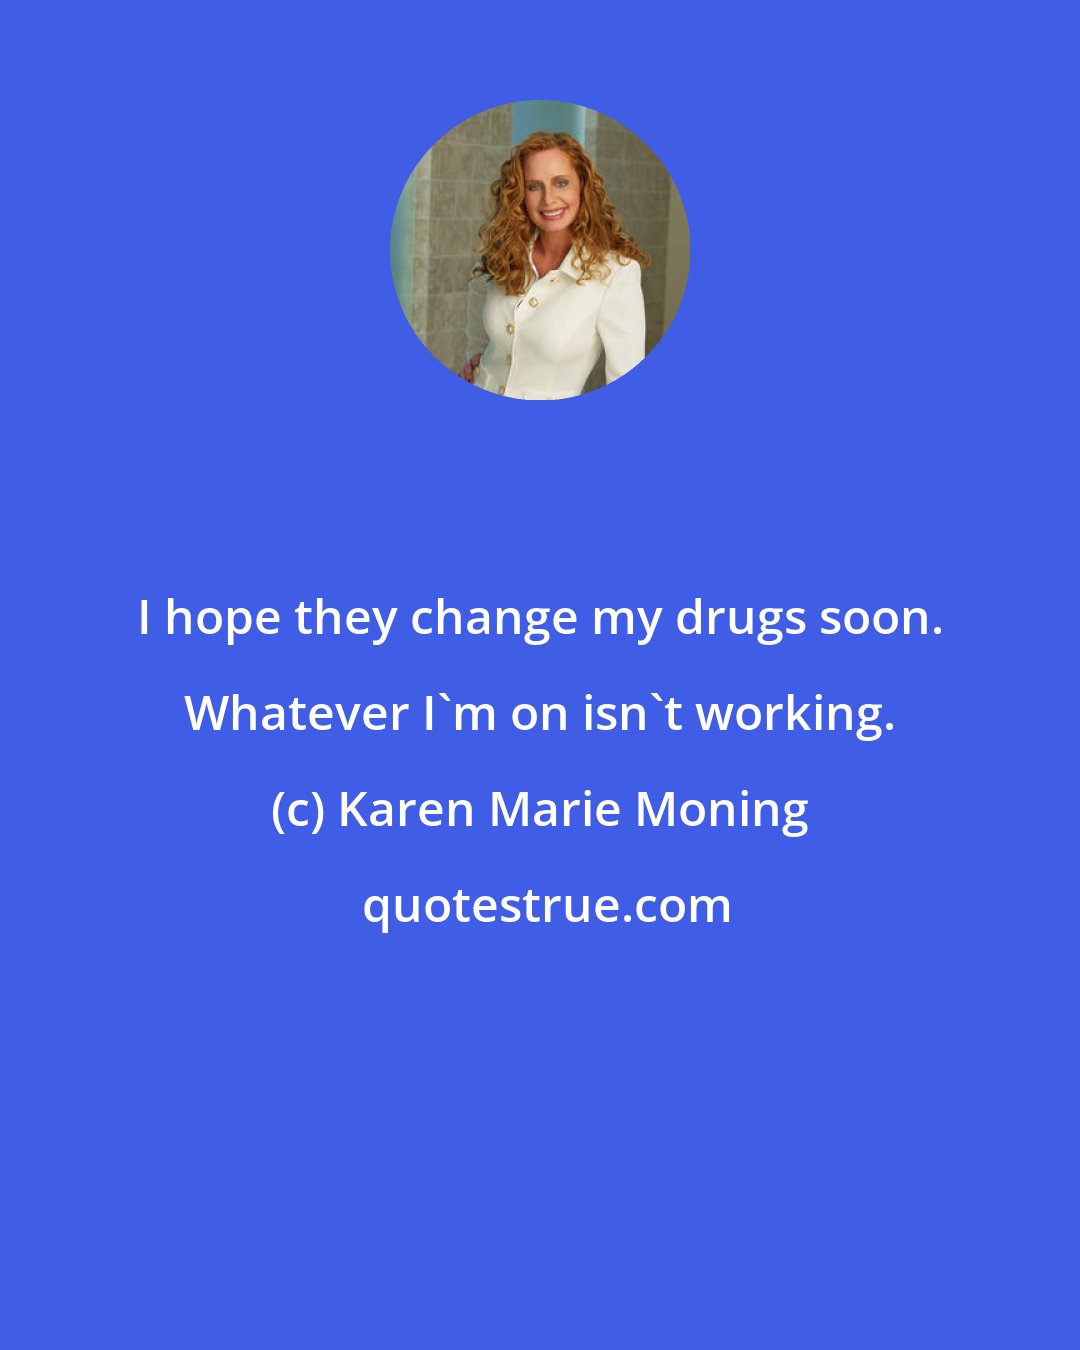 Karen Marie Moning: I hope they change my drugs soon. Whatever I'm on isn't working.